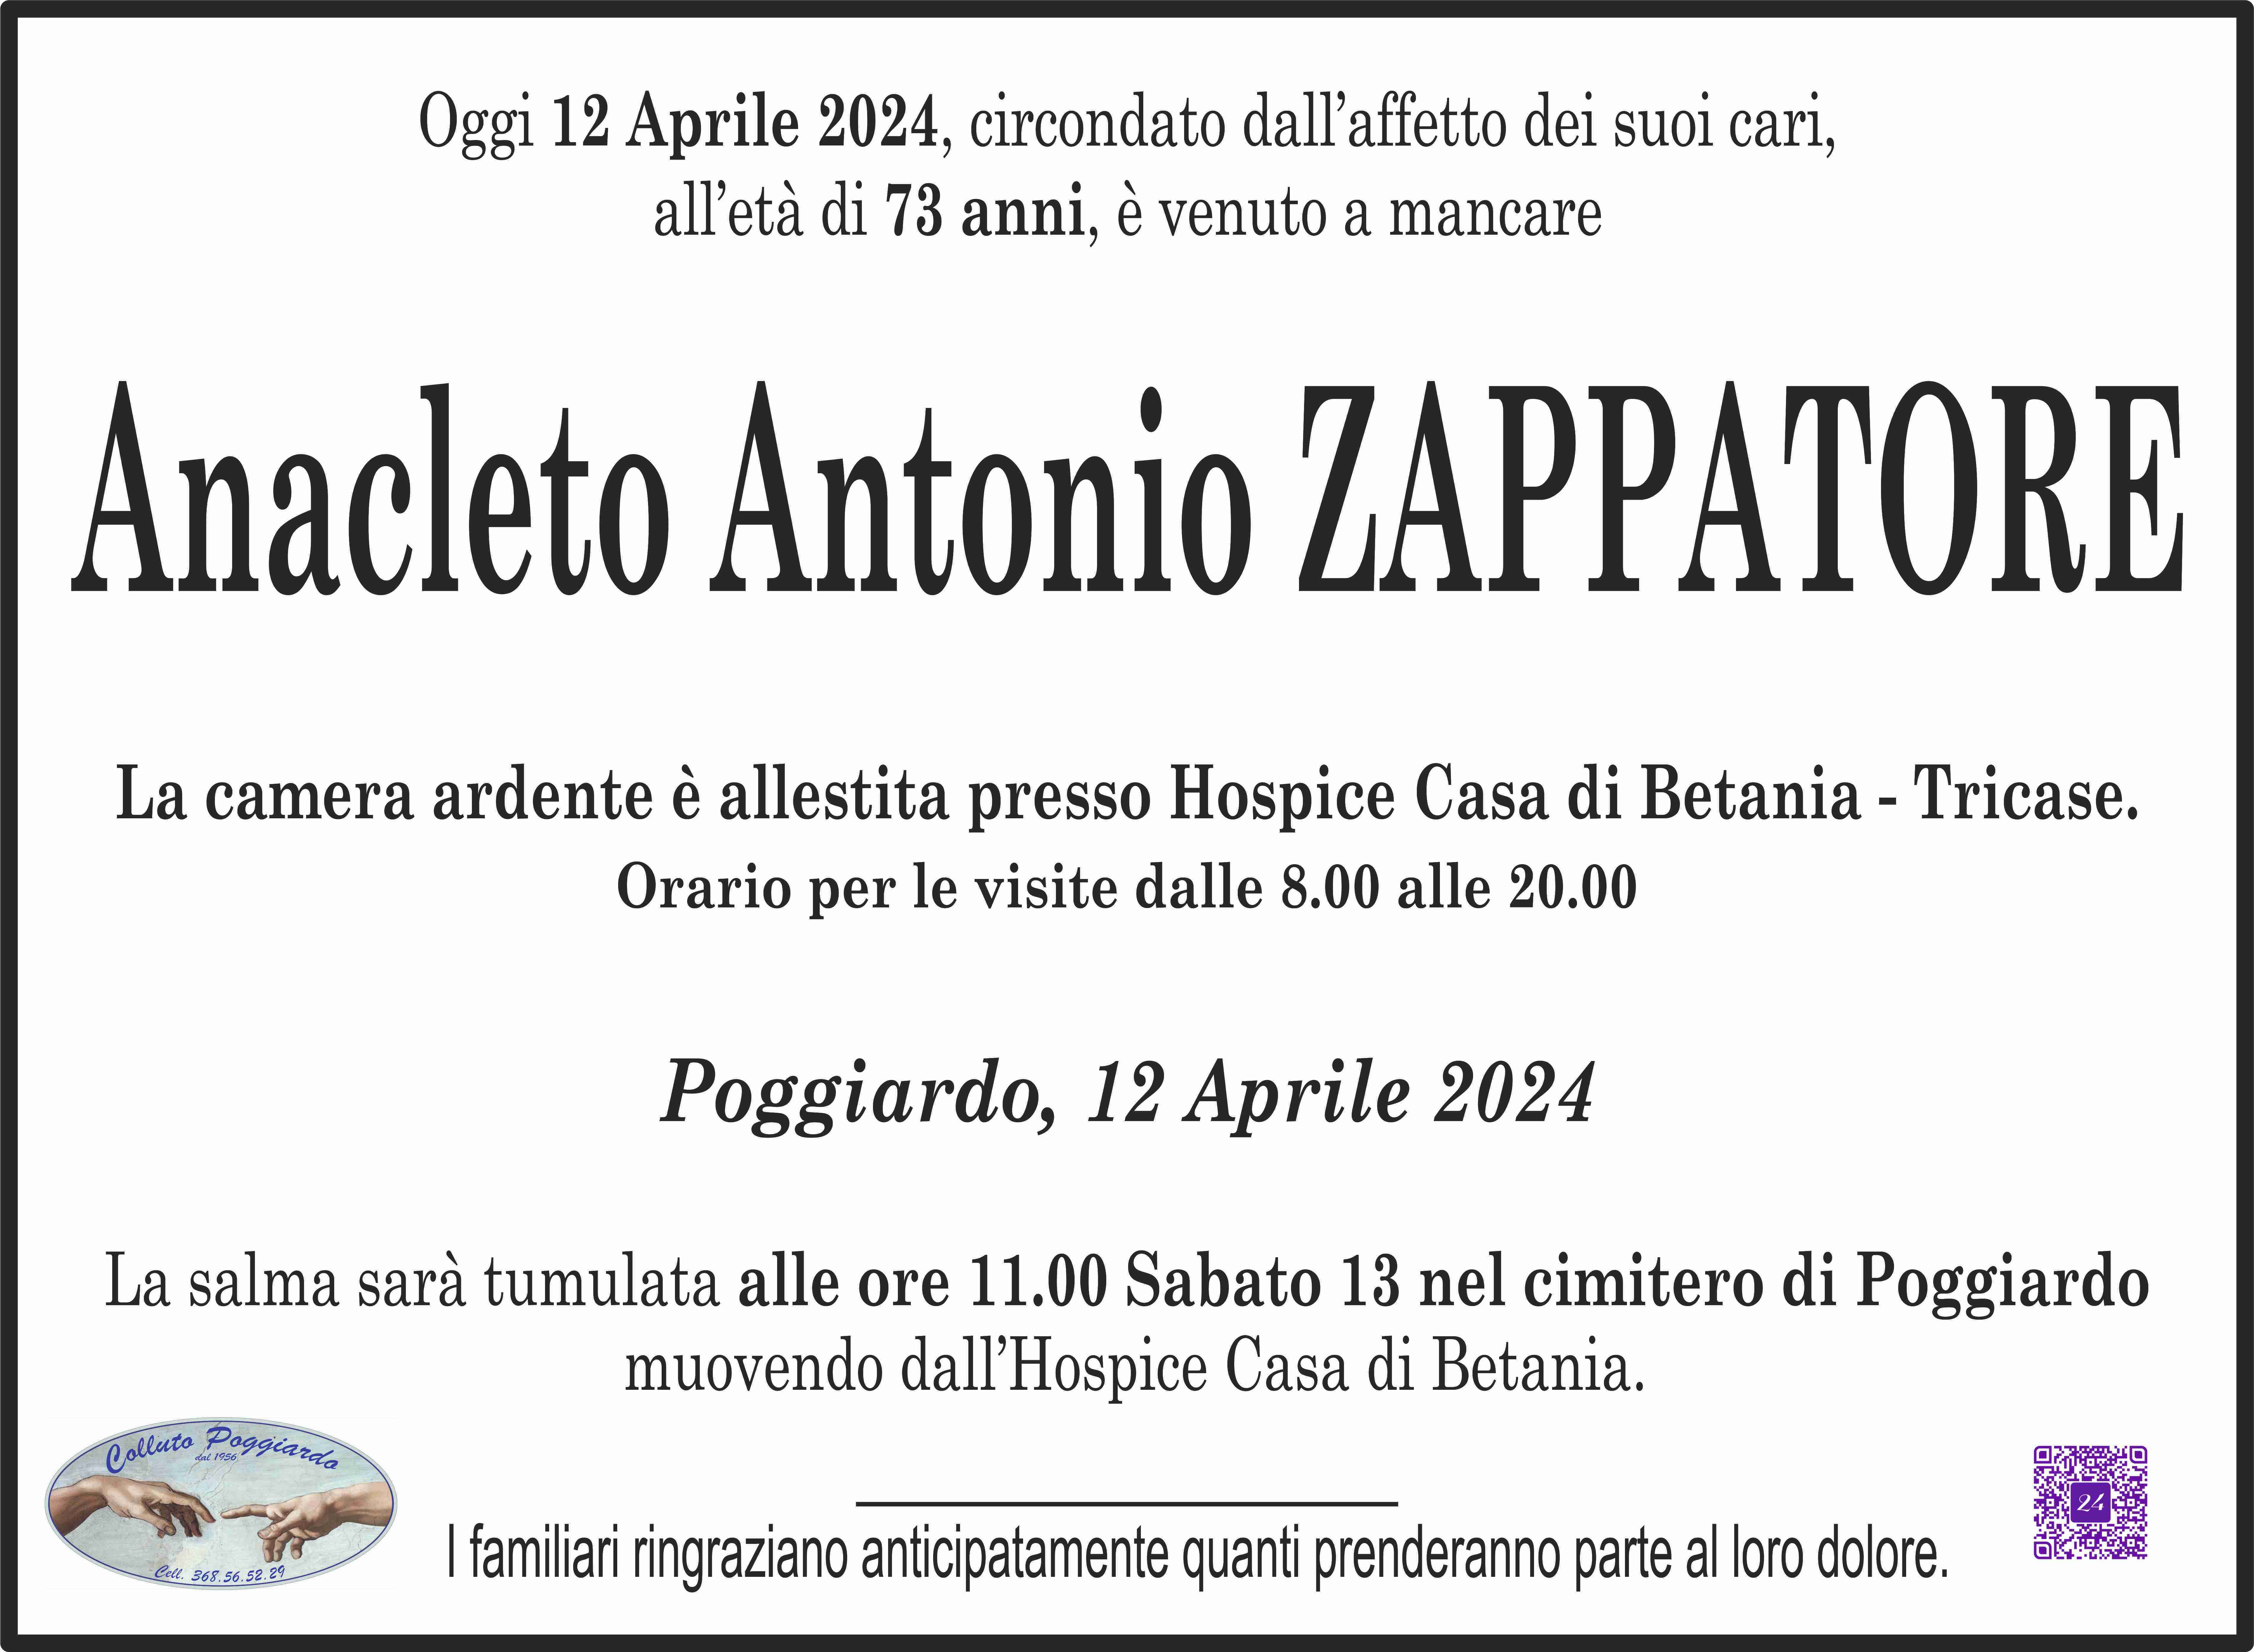 Anacleto Antonio Zappatore